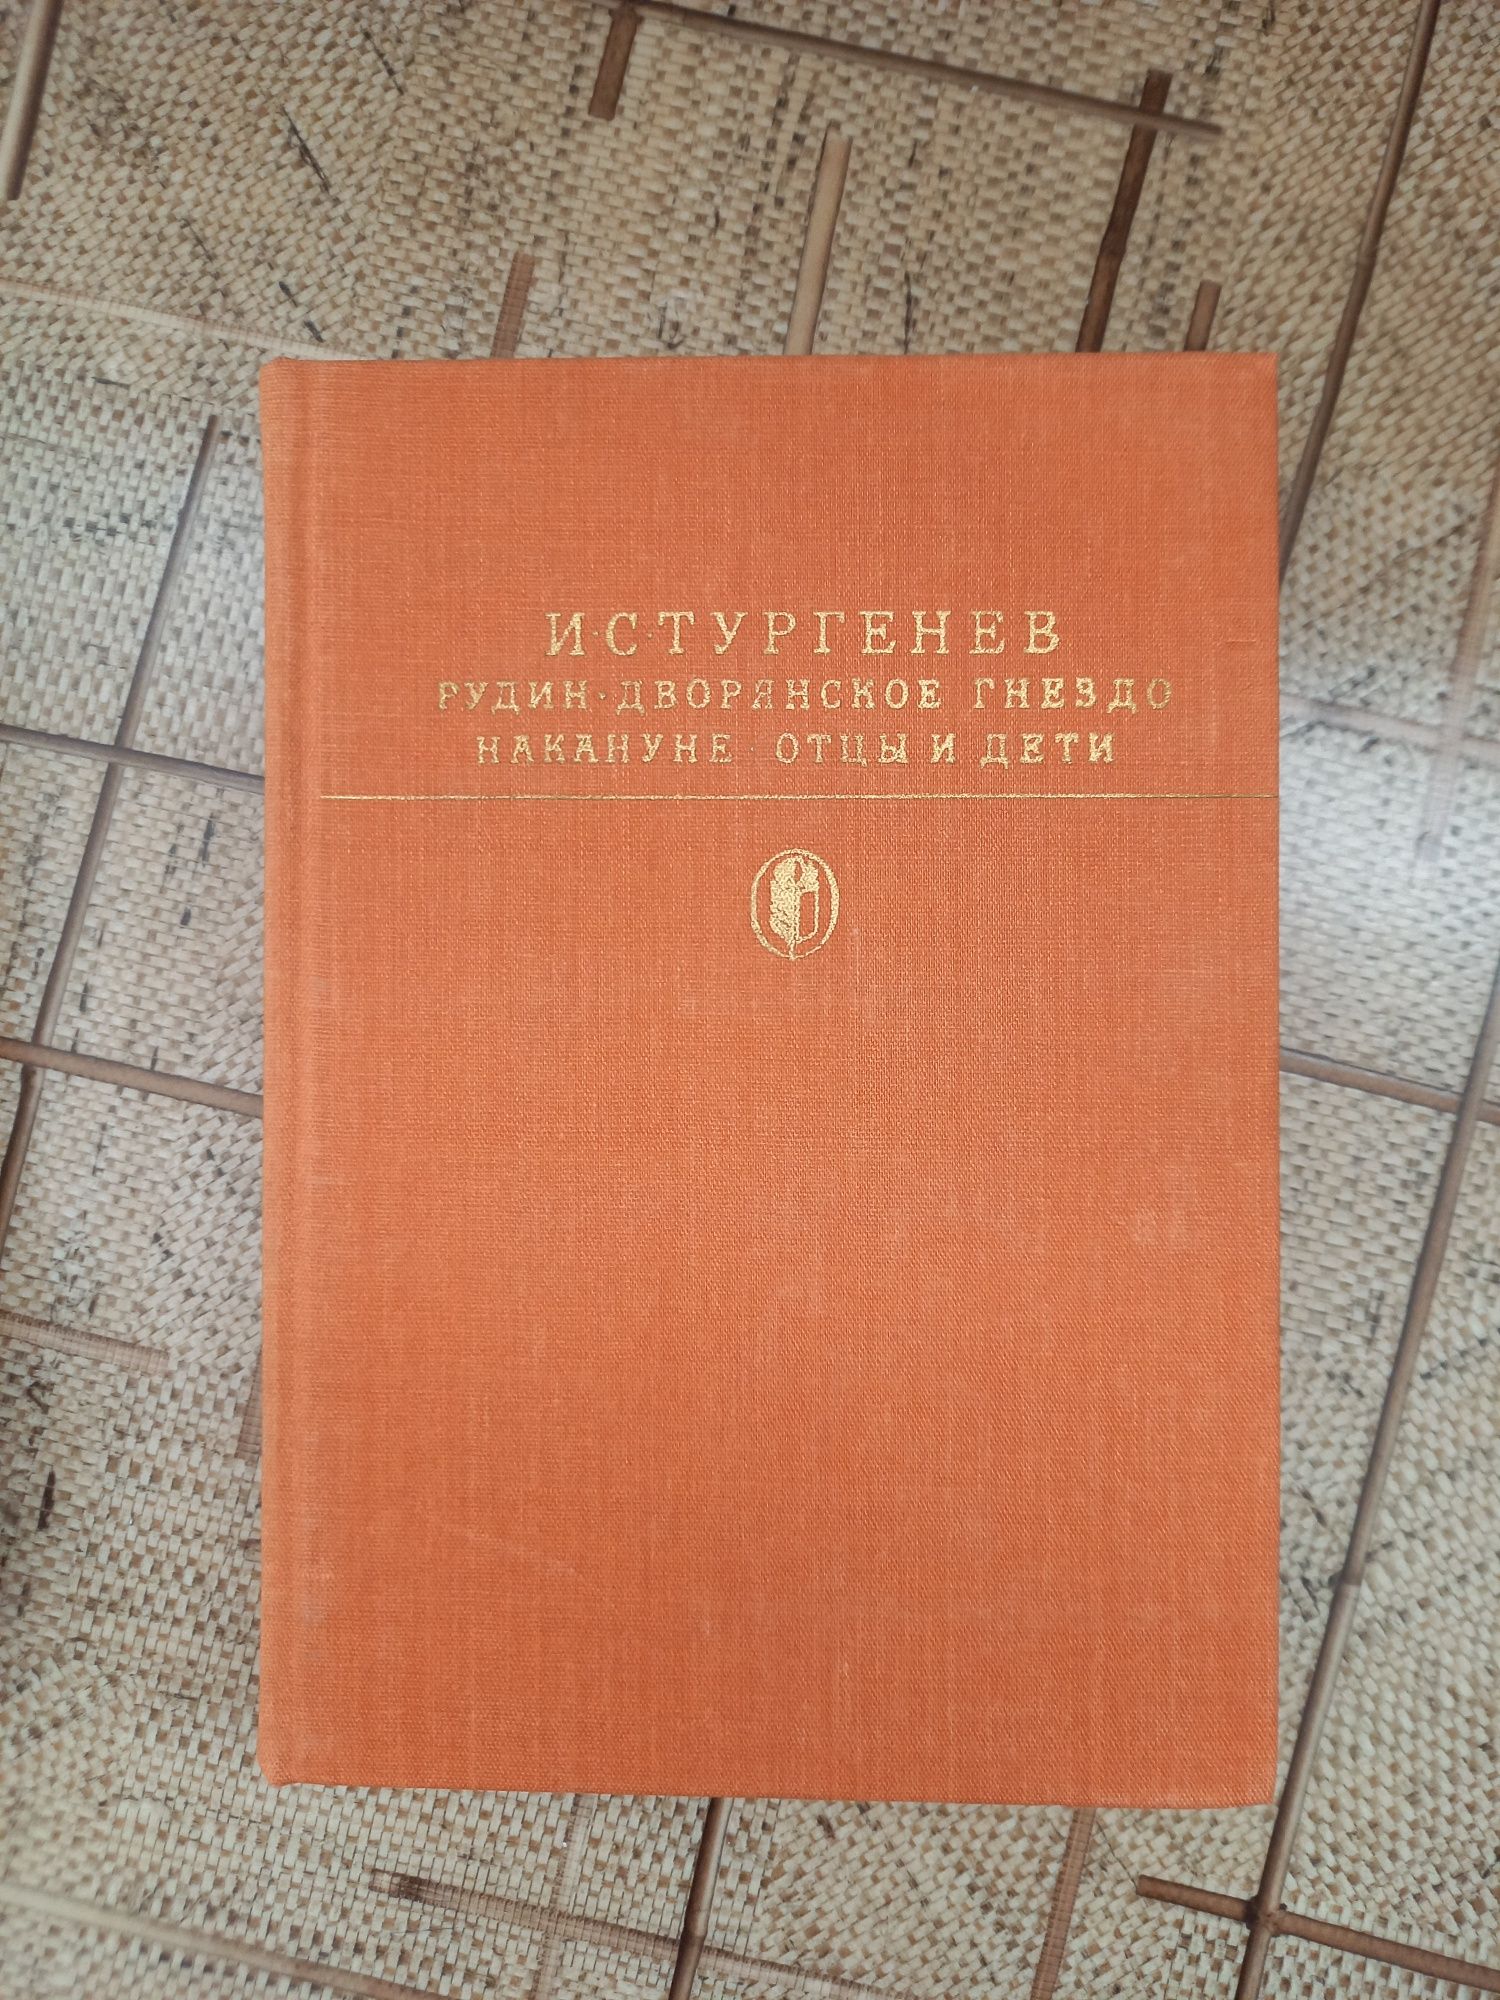 Книги И.С.Тургенева